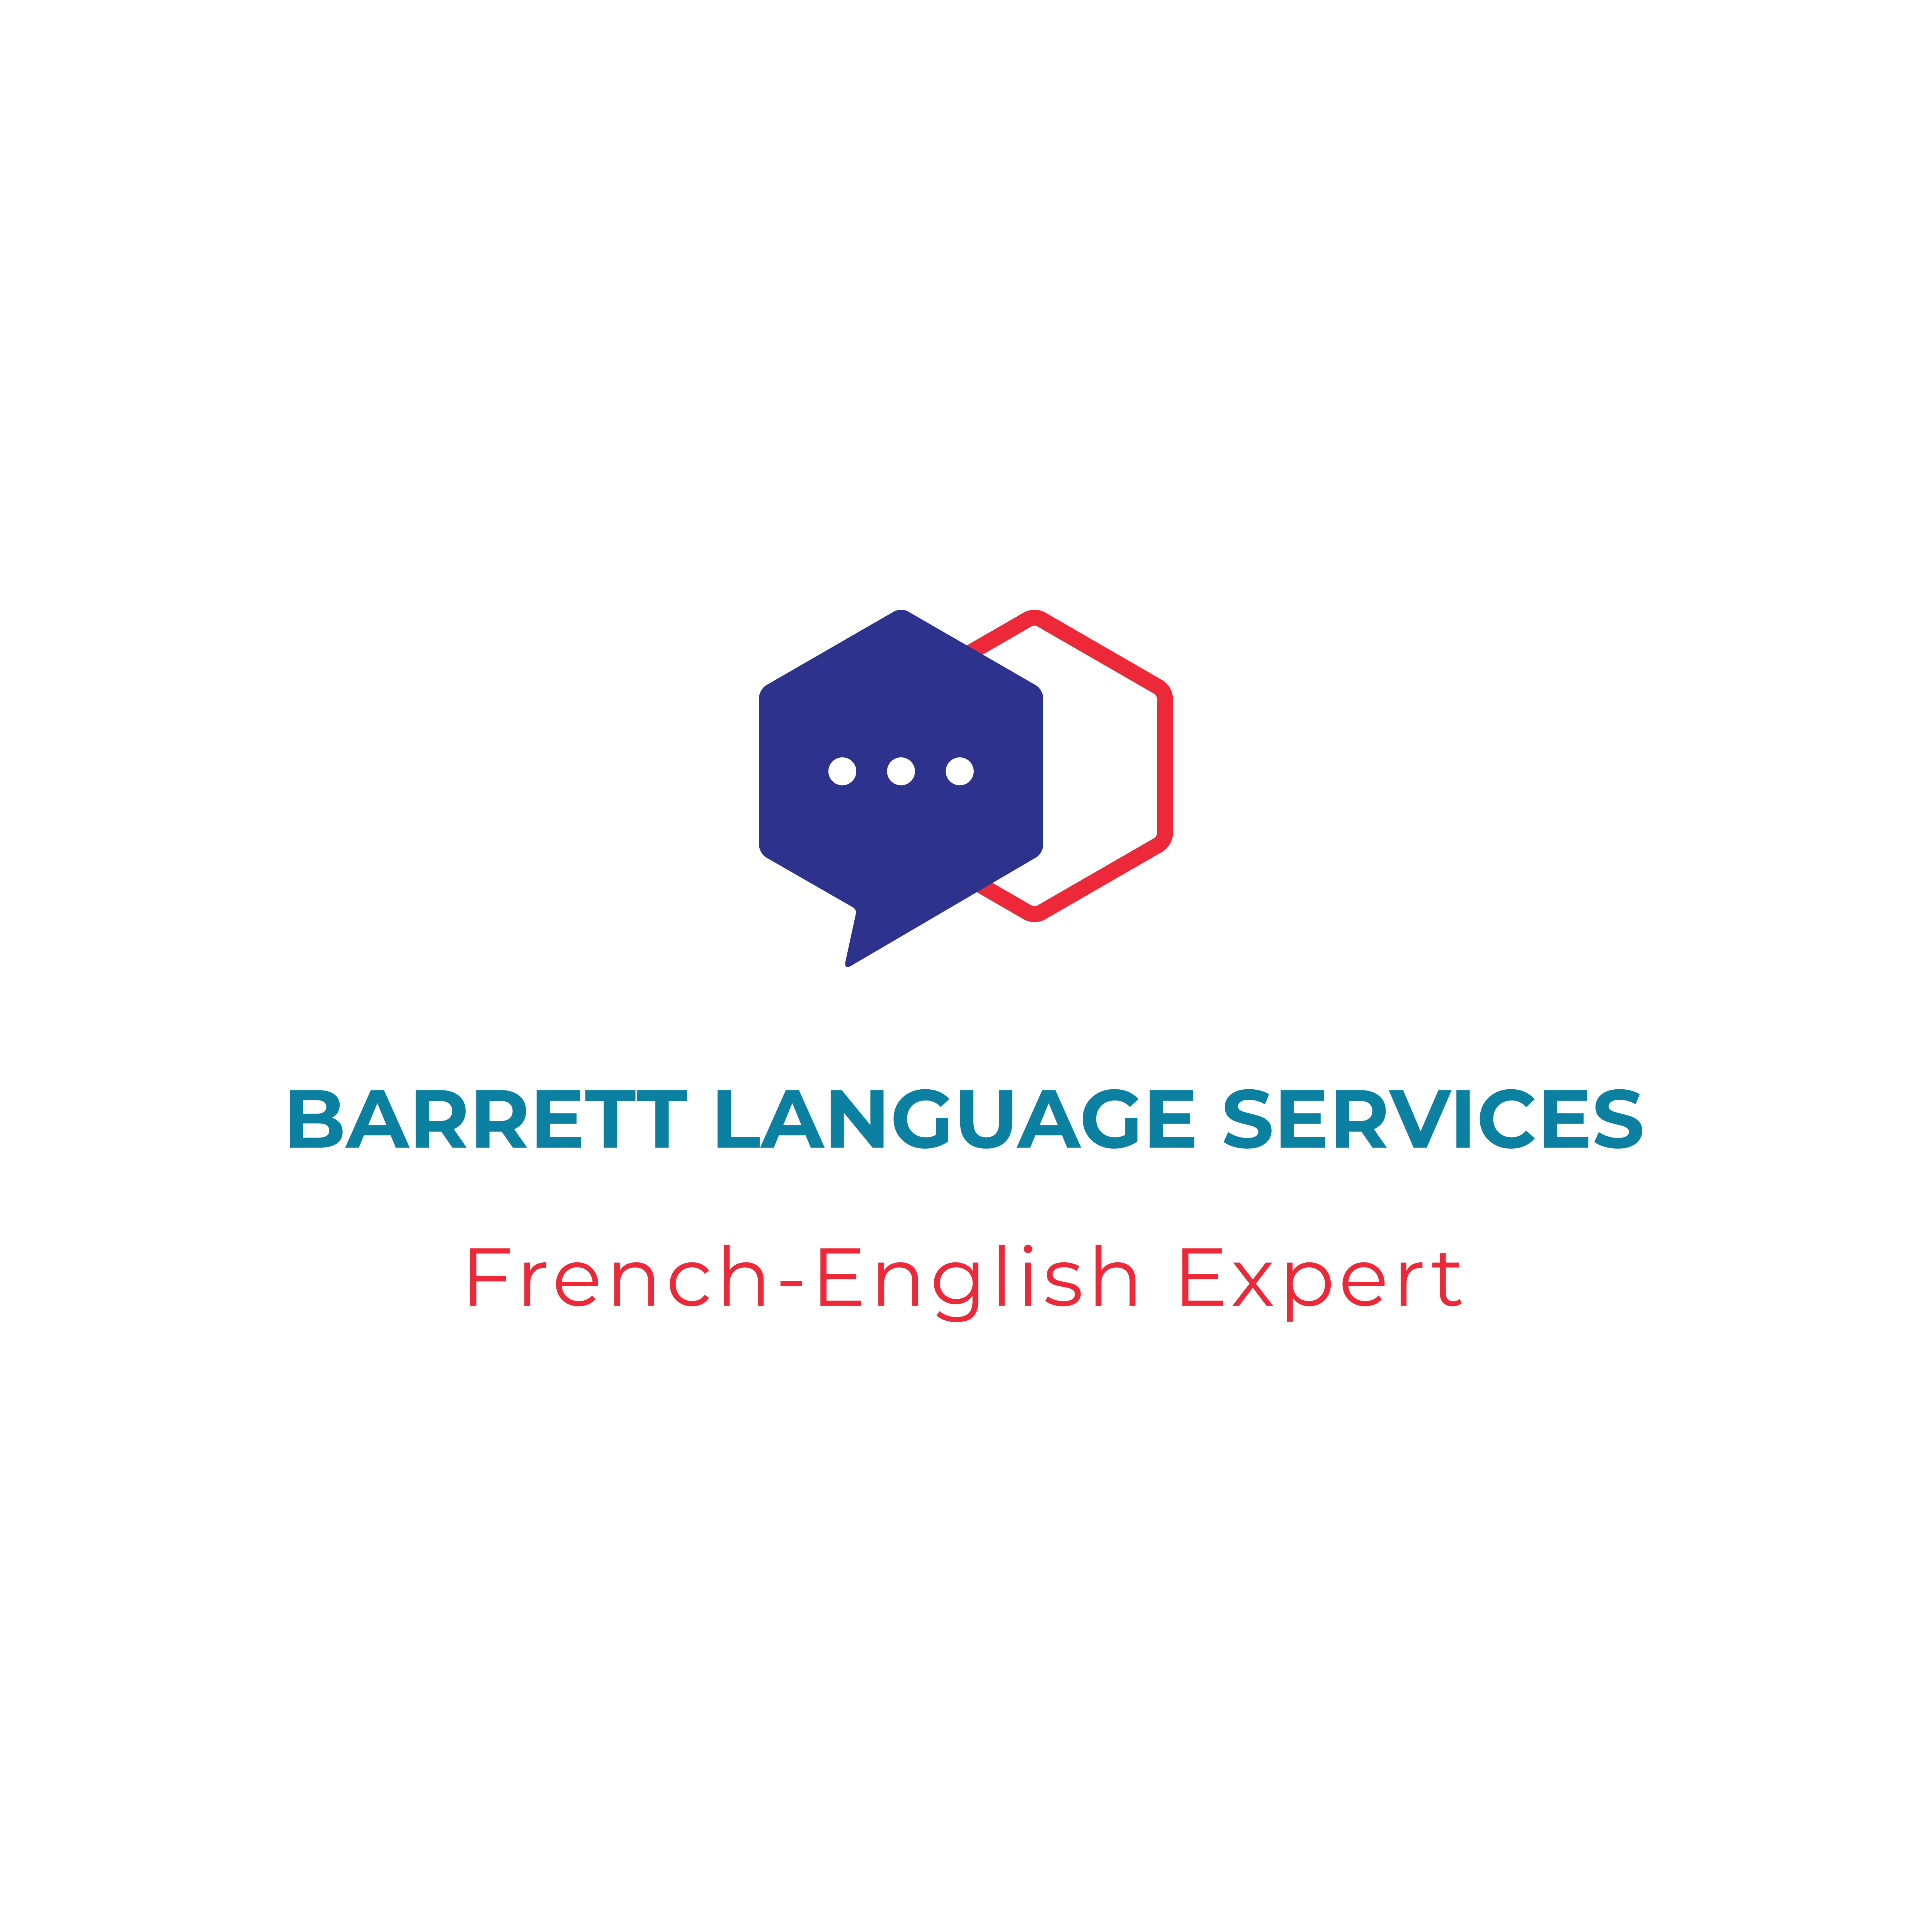 Barrett Language Services